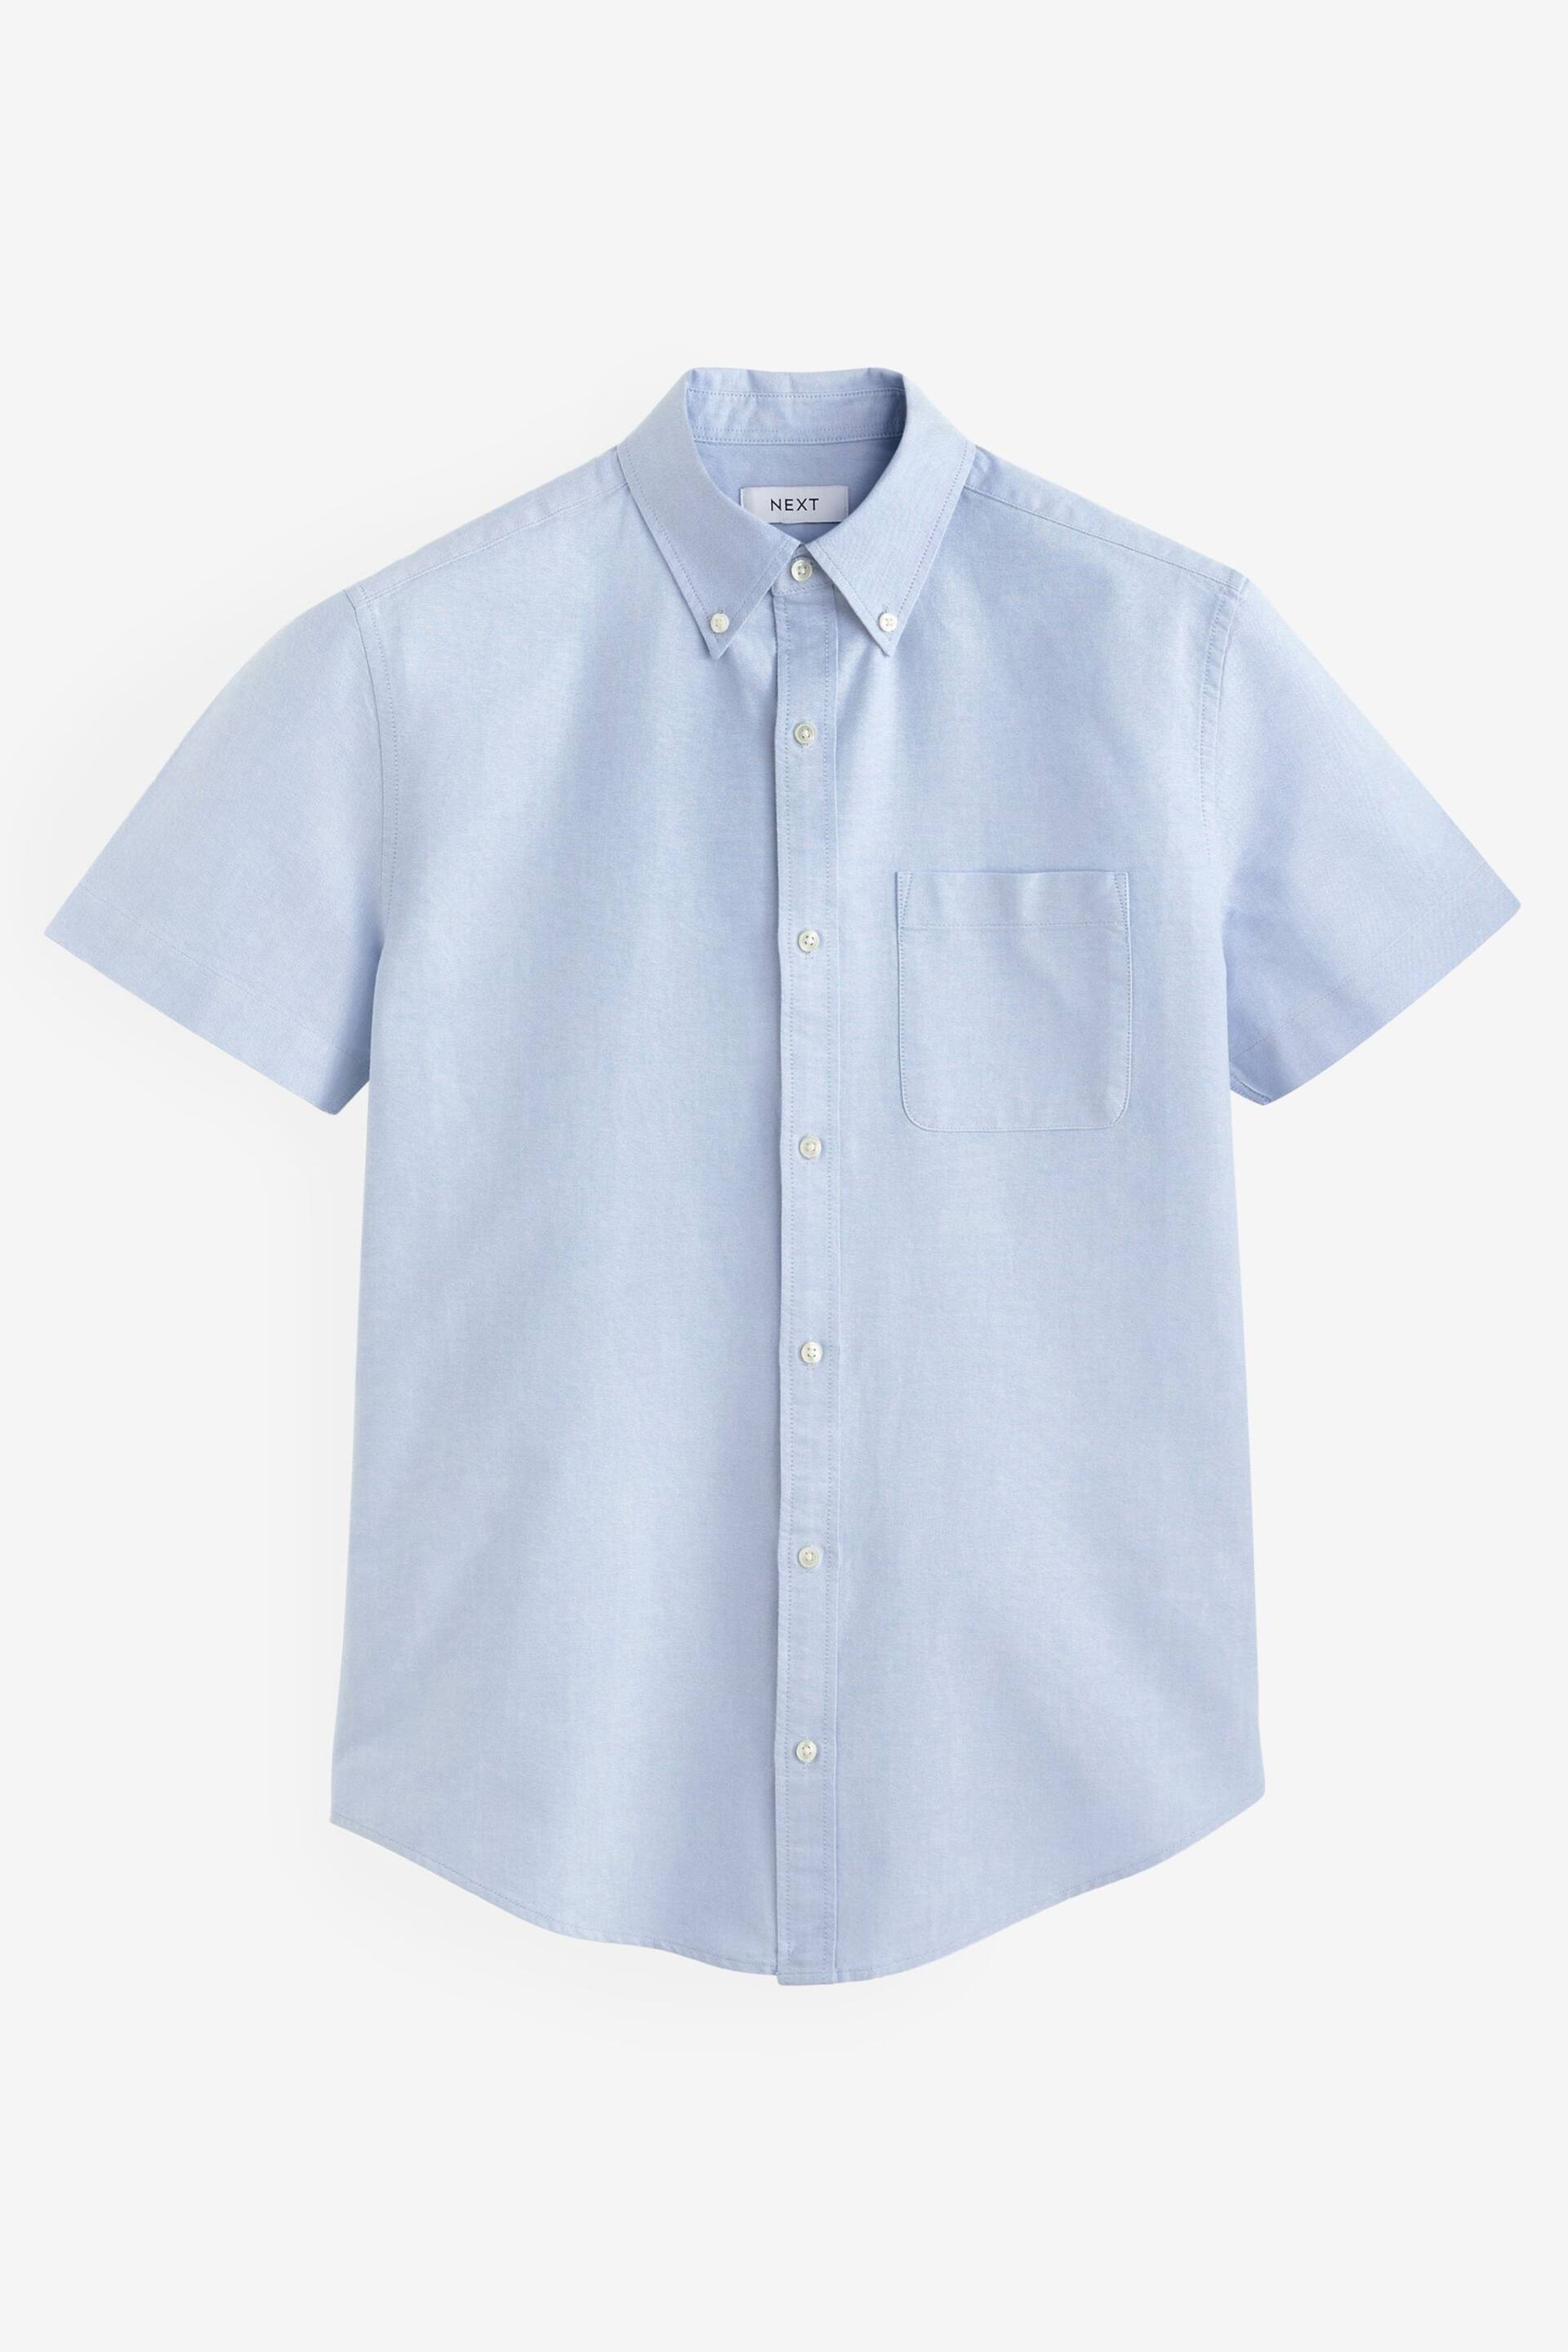 White/Blue/Navy 3 Pack Short Sleeve Oxford Shirt 3 Pack - Image 4 of 10